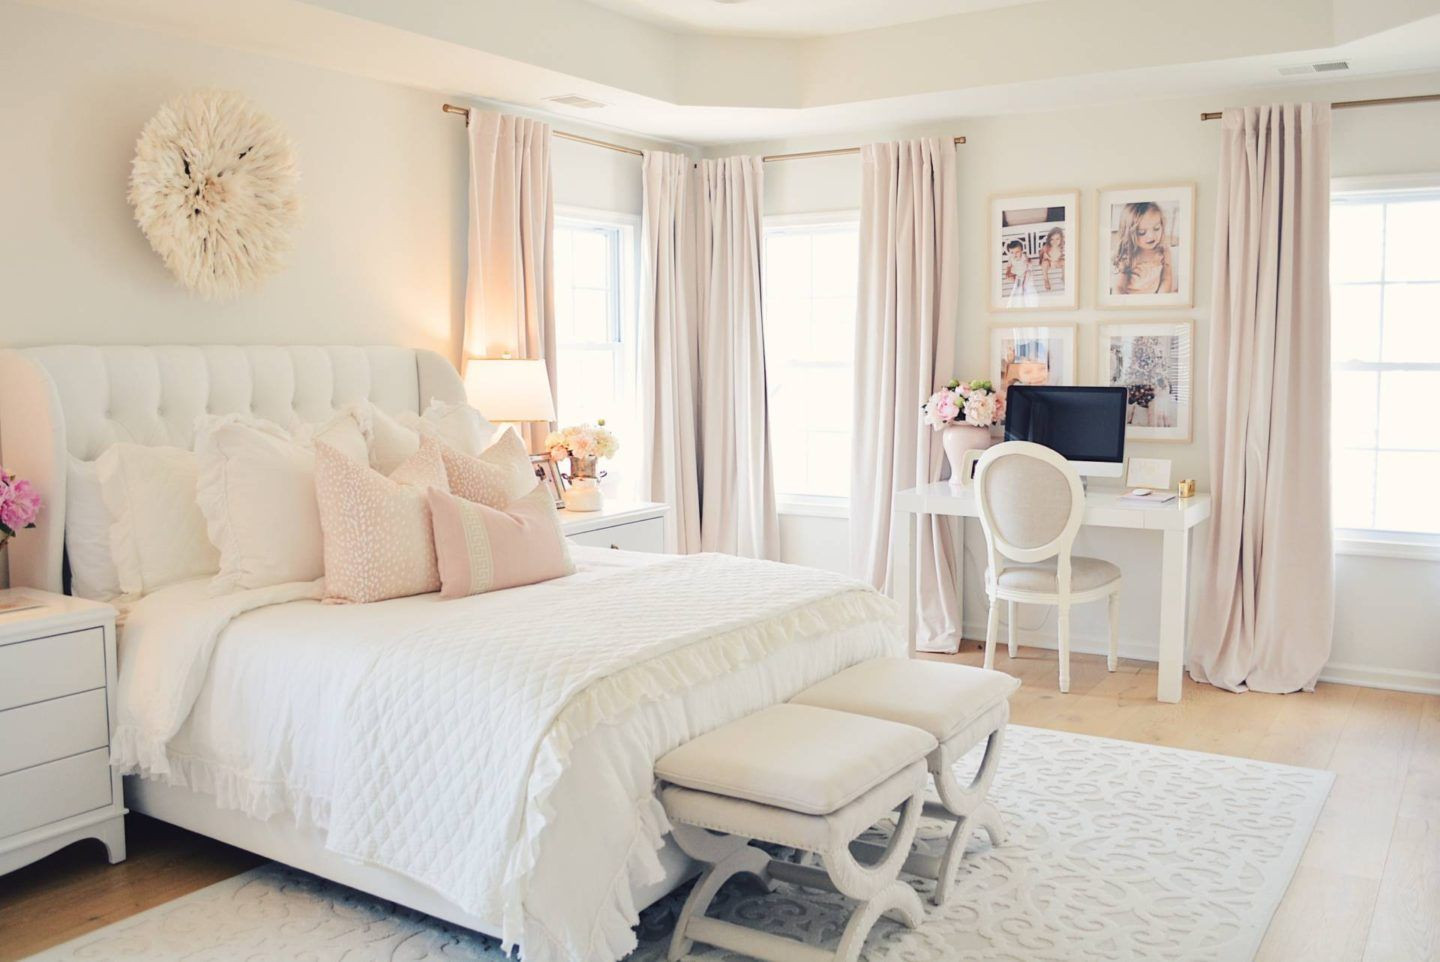 Elegant Bedspreads Master Bedroom
 Elegant White Master Bedroom & Blush Decorative Pillows